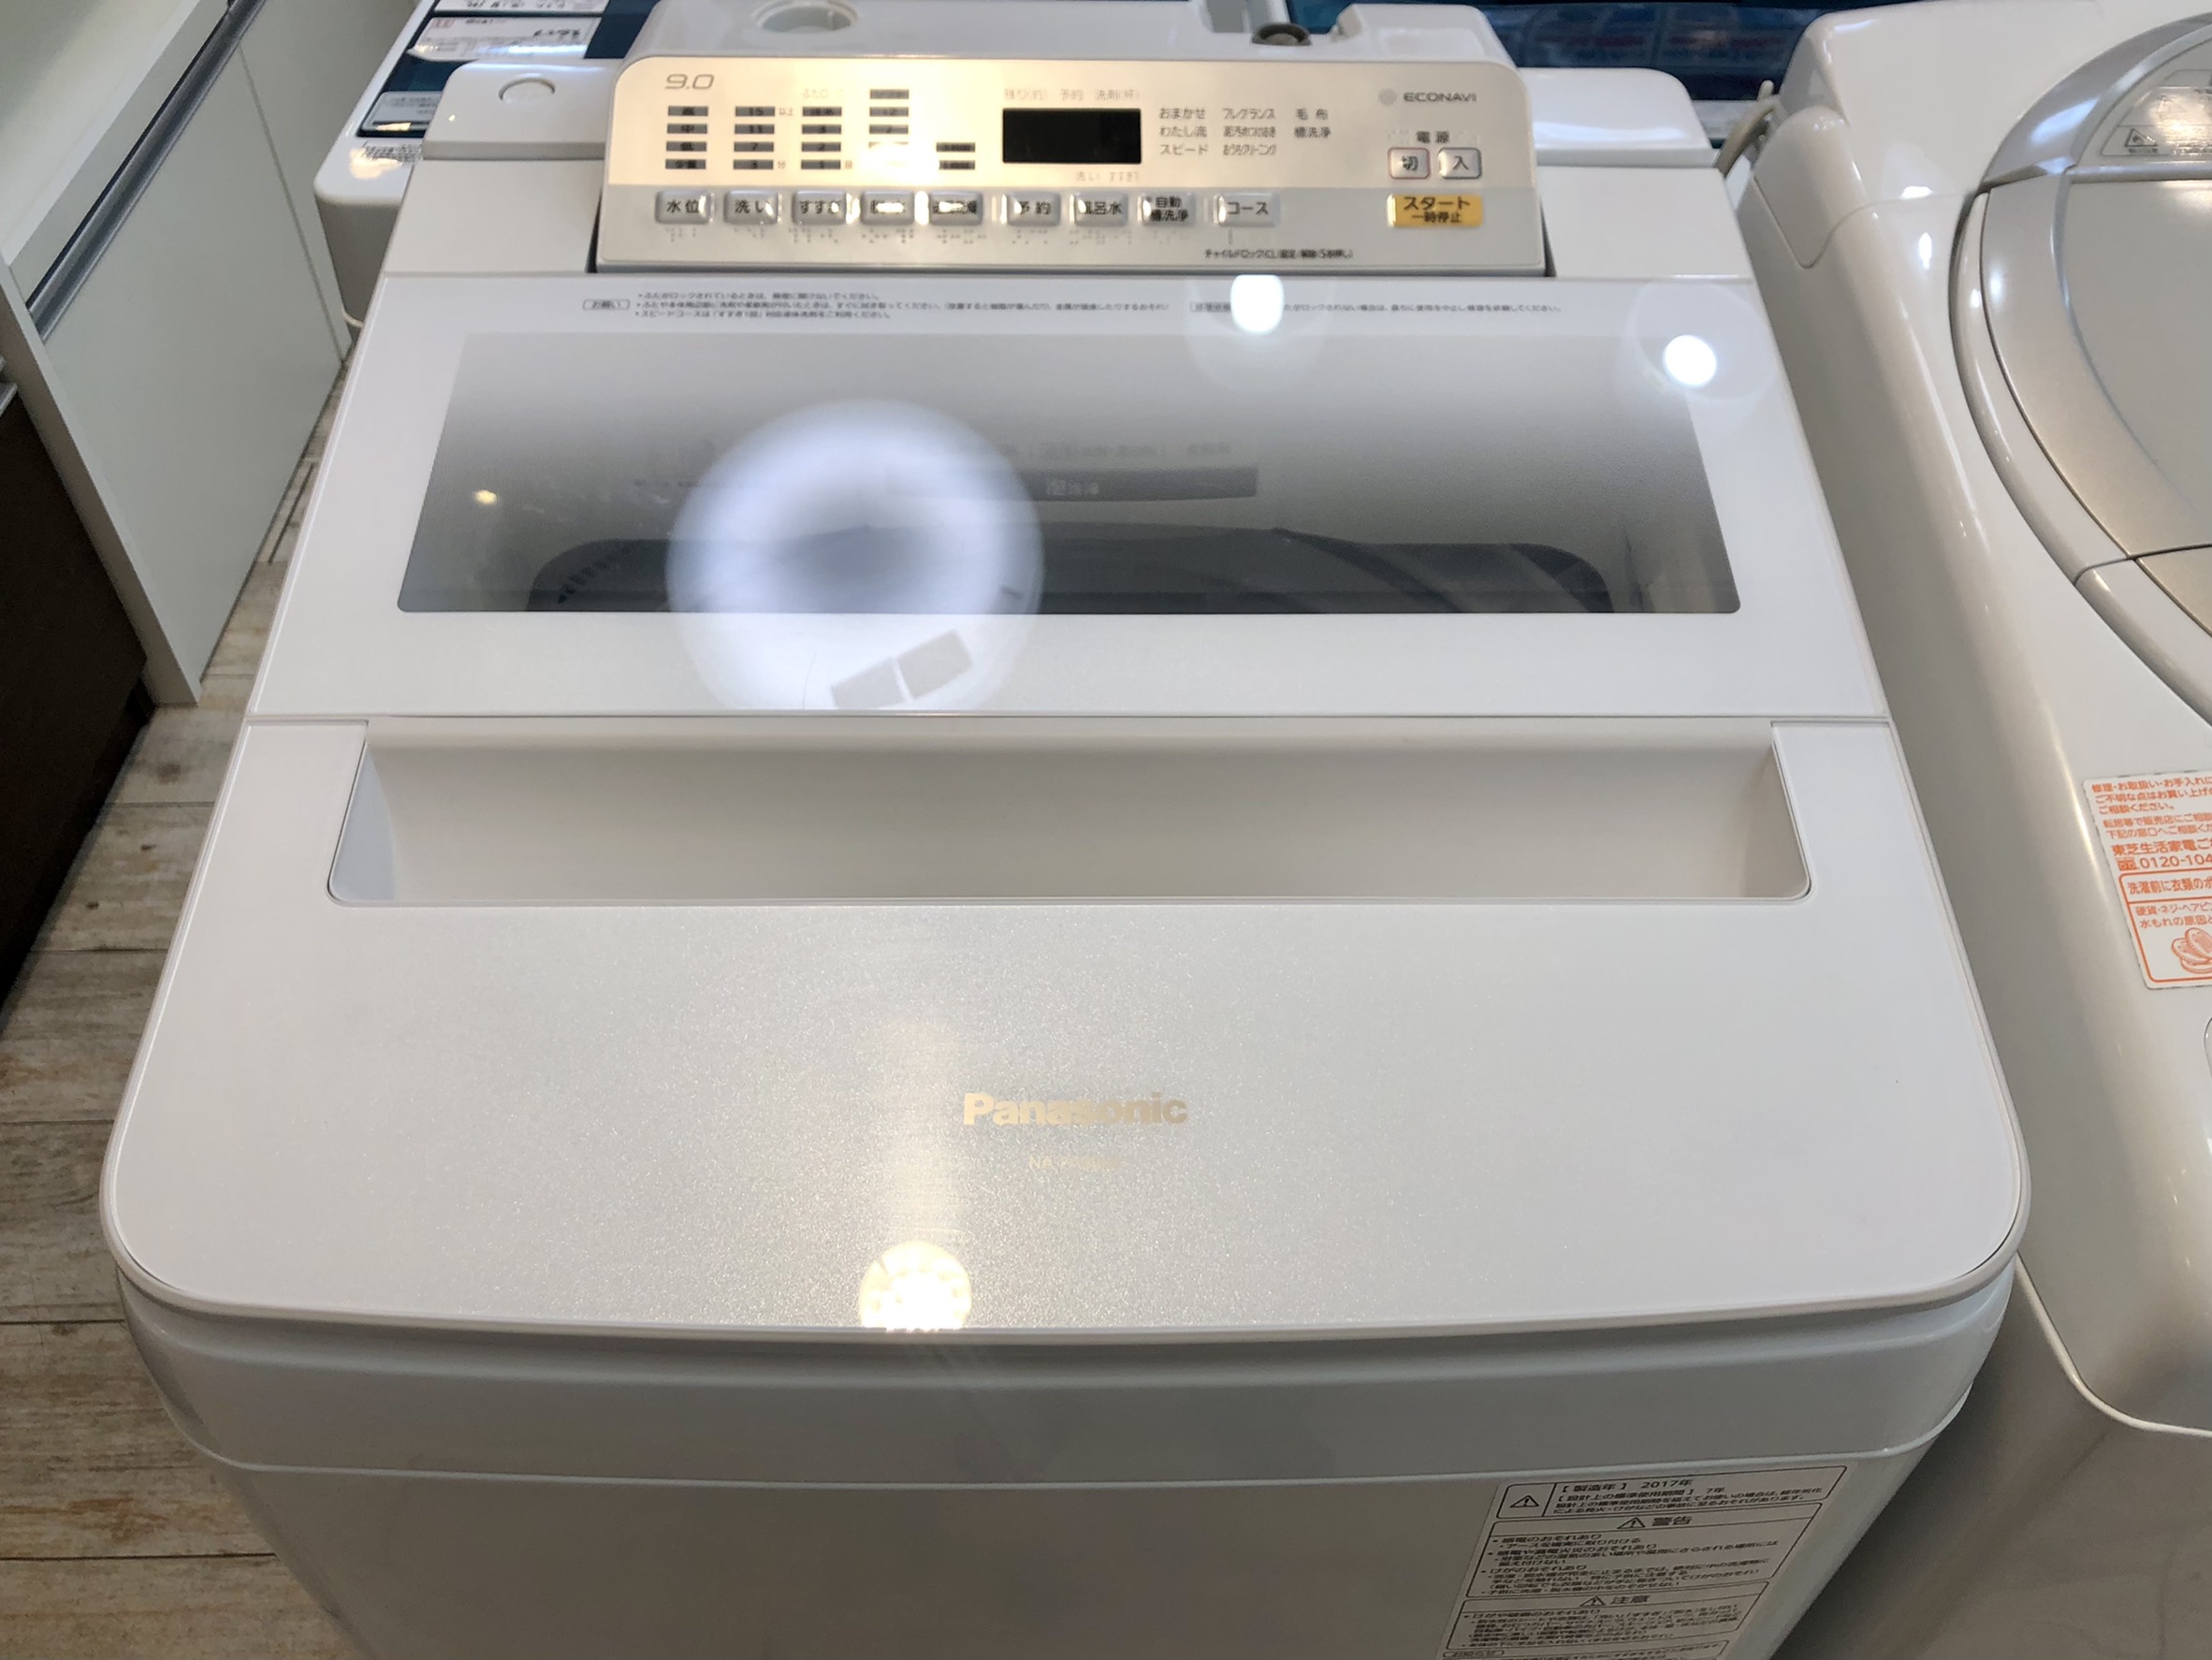 Panasonic 2017年製 9.0kg全自動洗濯機 NA-FA90H5 買取しました。 | 愛知と岐阜のリサイクルショップ 再良市場